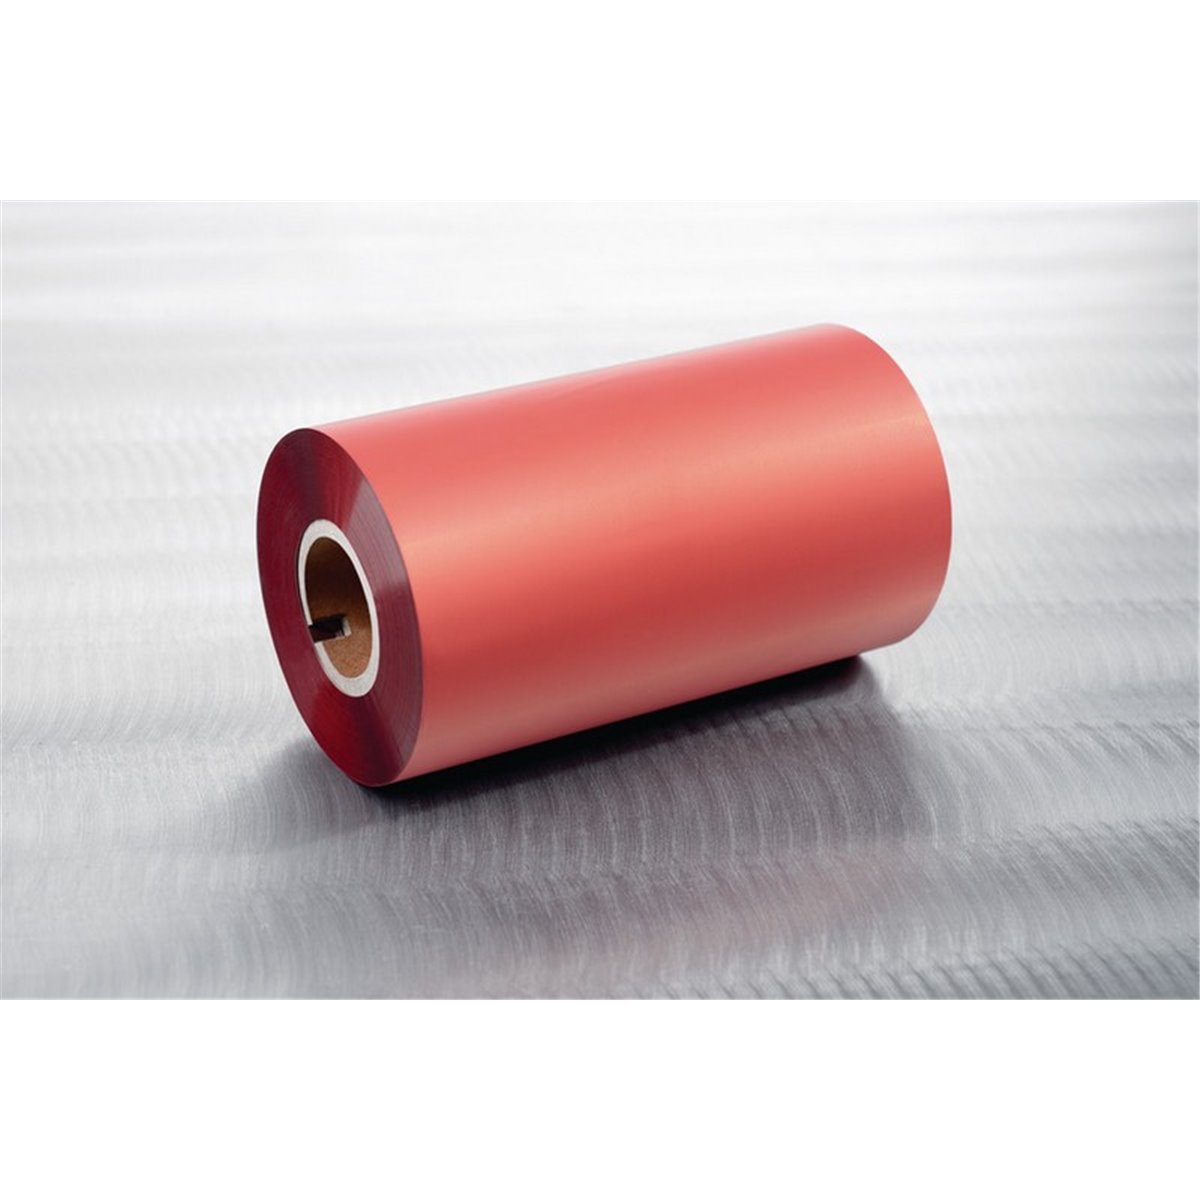 Taśma barwiąca TTRR 110 mm-PET-RD, 110mm x 300m, czerwona HellermannTyton